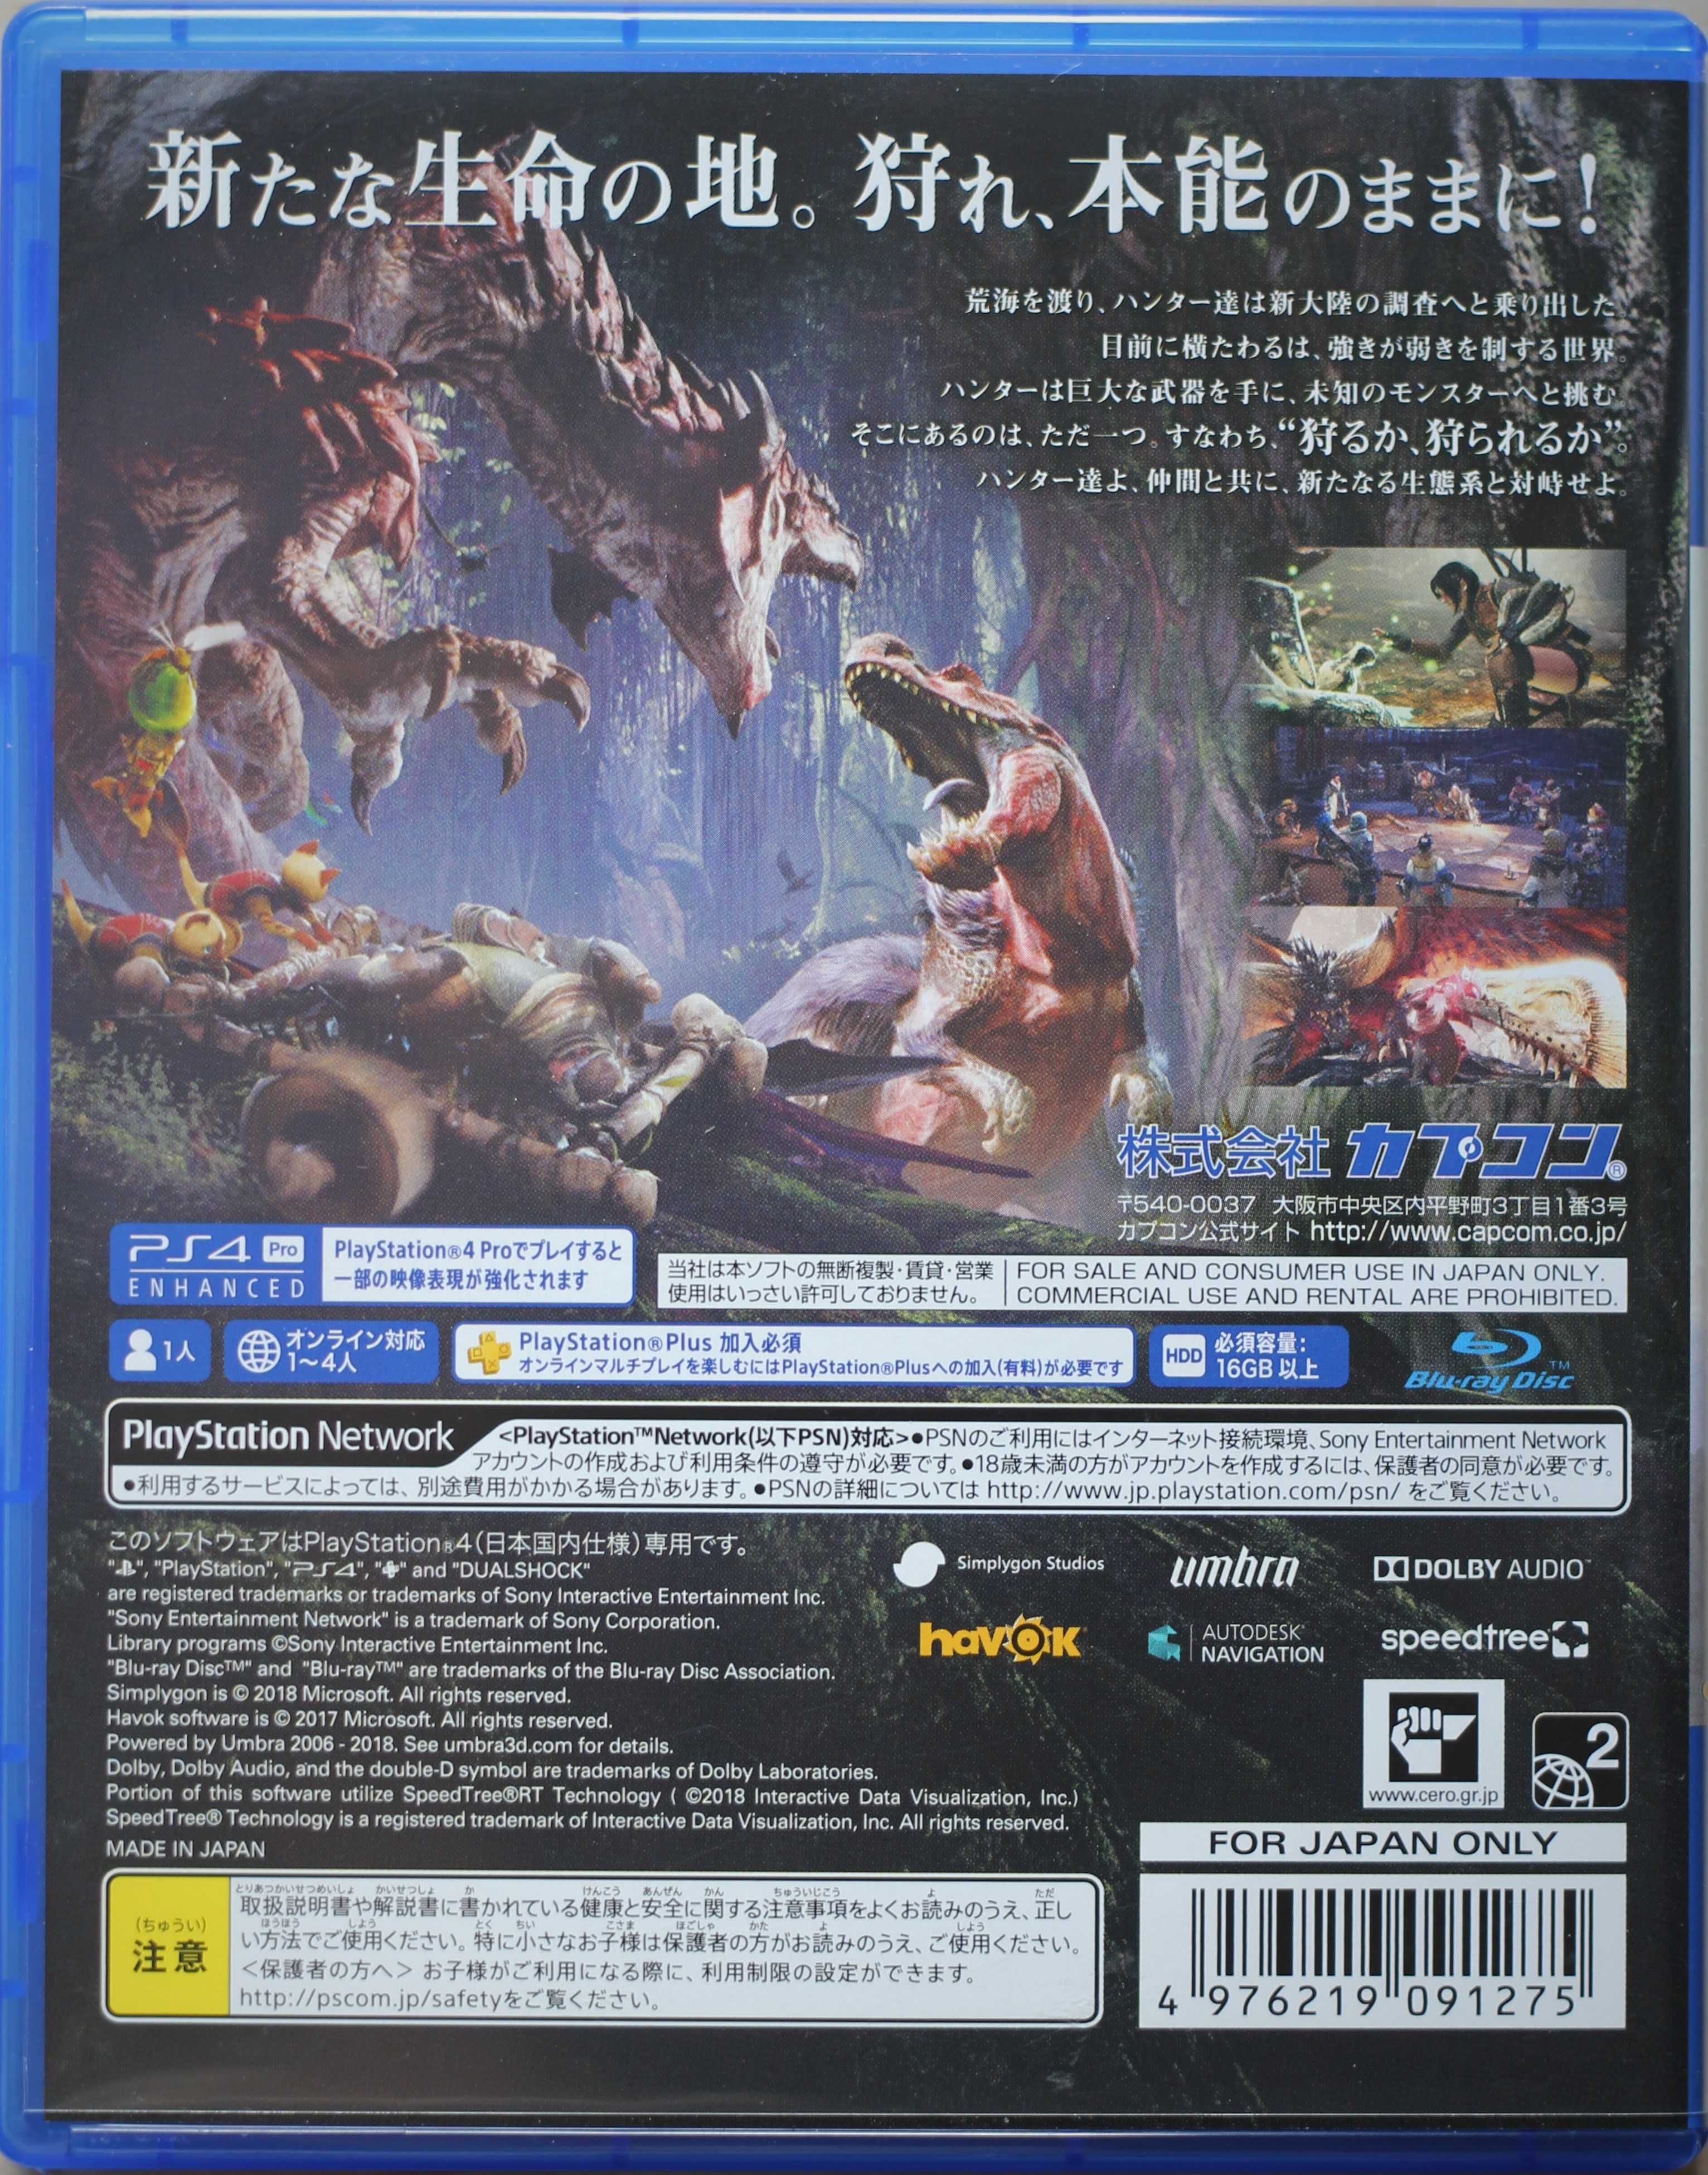 Monster Hunter World gra PS4 wersja japońska w systemie CERO